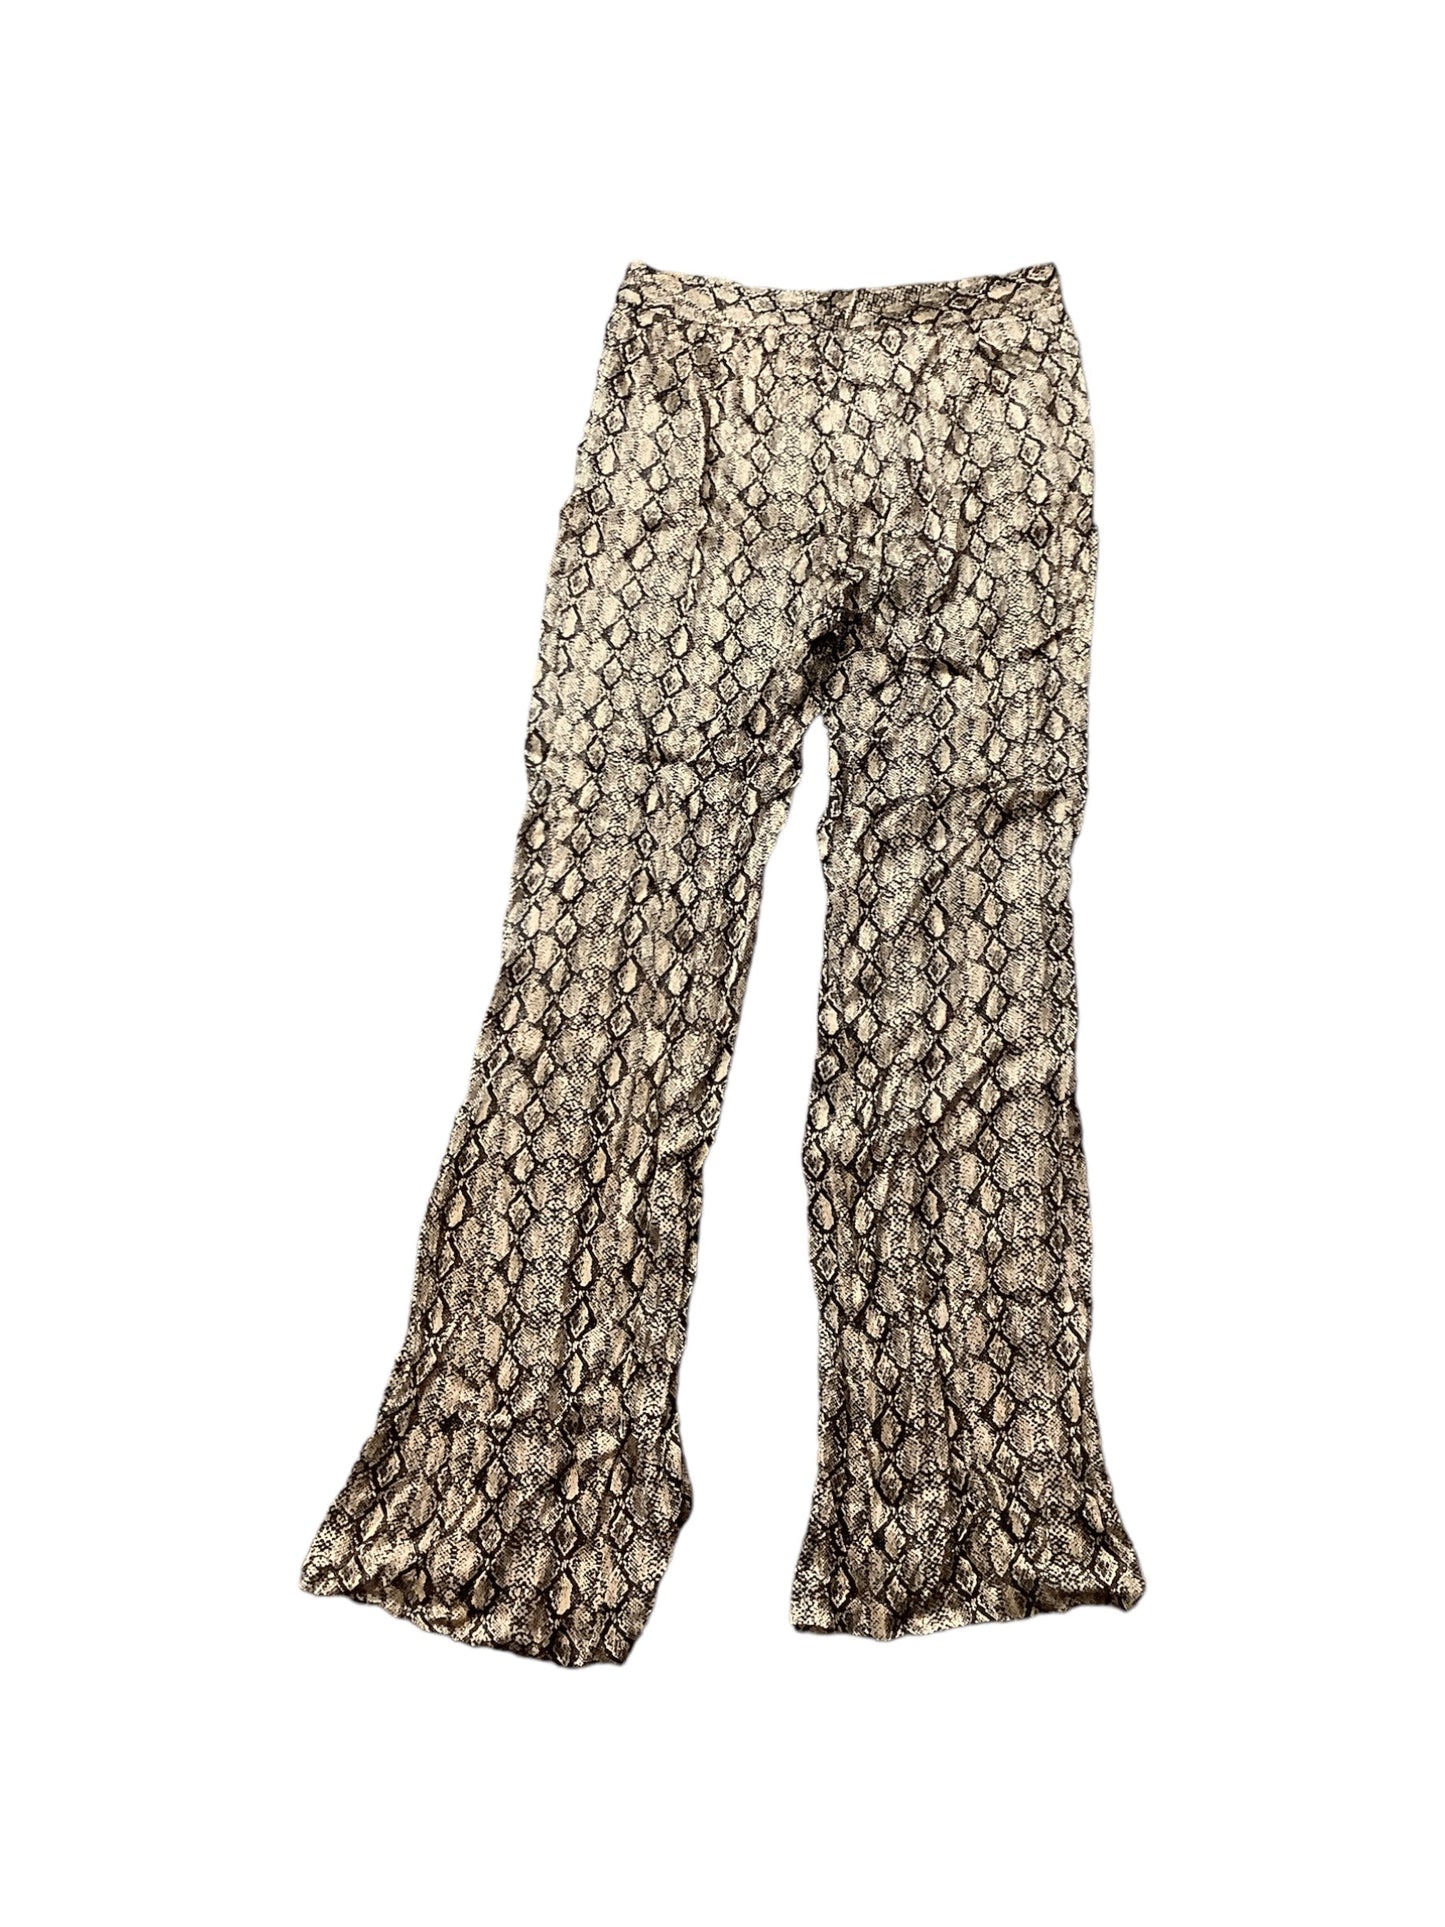 Snakeskin Print Pants Dress Zara, Size L